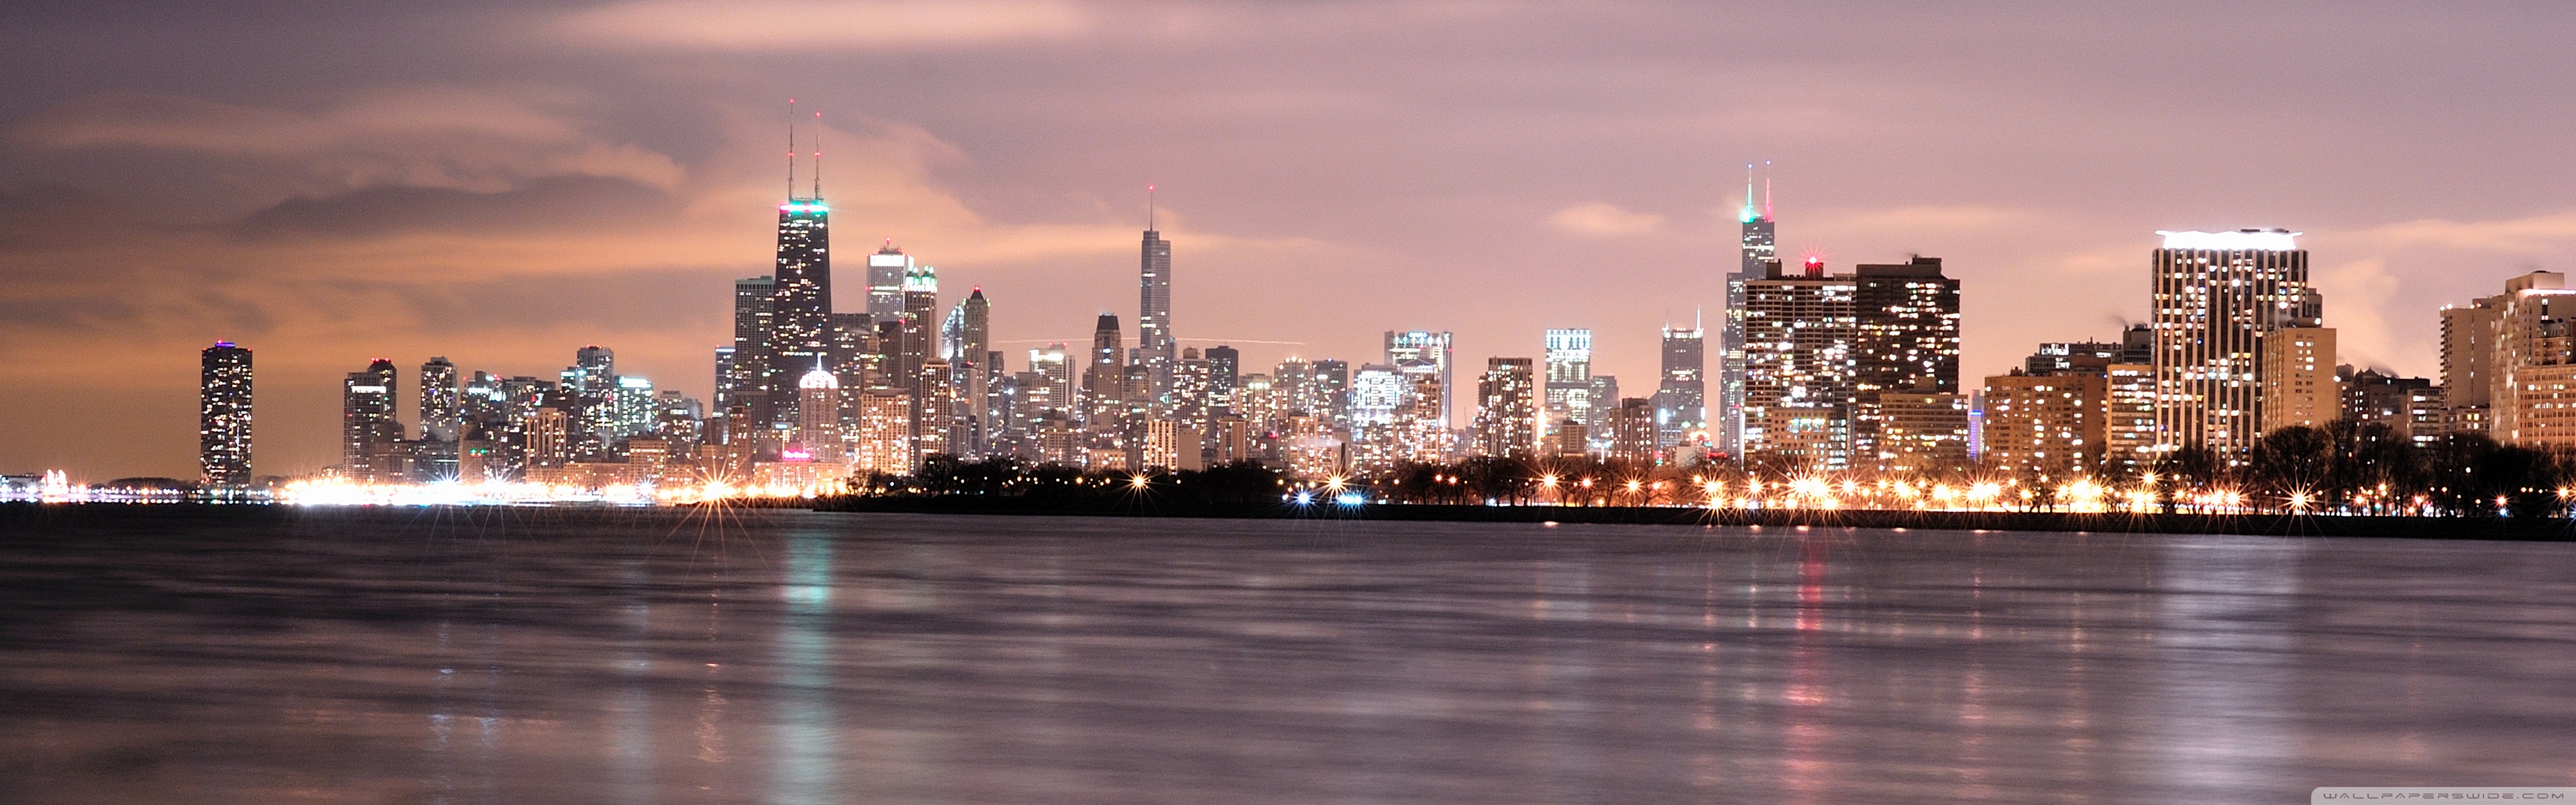 Chicago Skyline Ultra HD Desktop Background Wallpaper For 4k UHD